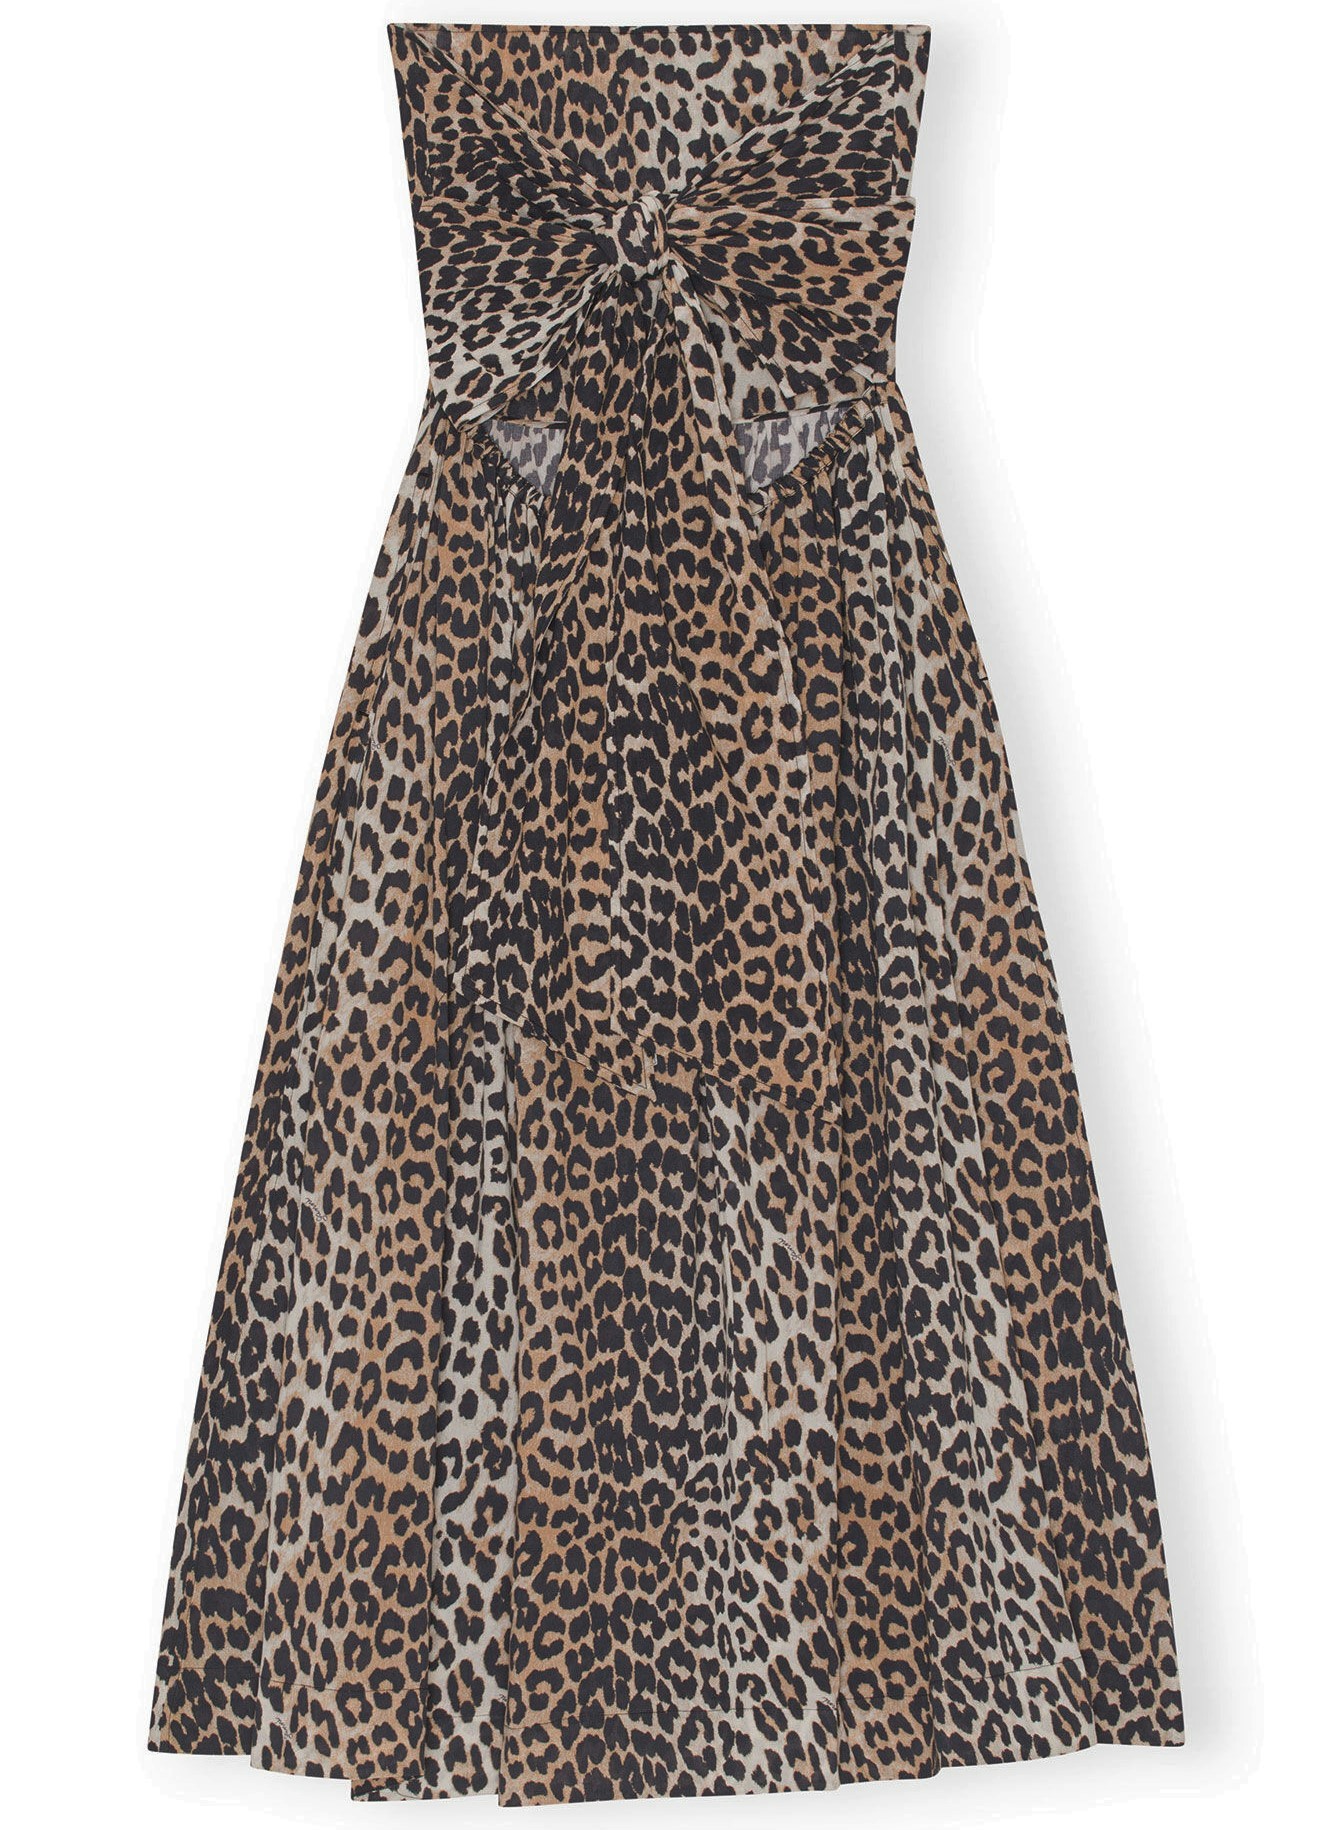 GANNI Light Cotton Tieband Multifunctional Dress in Leopard L / XL